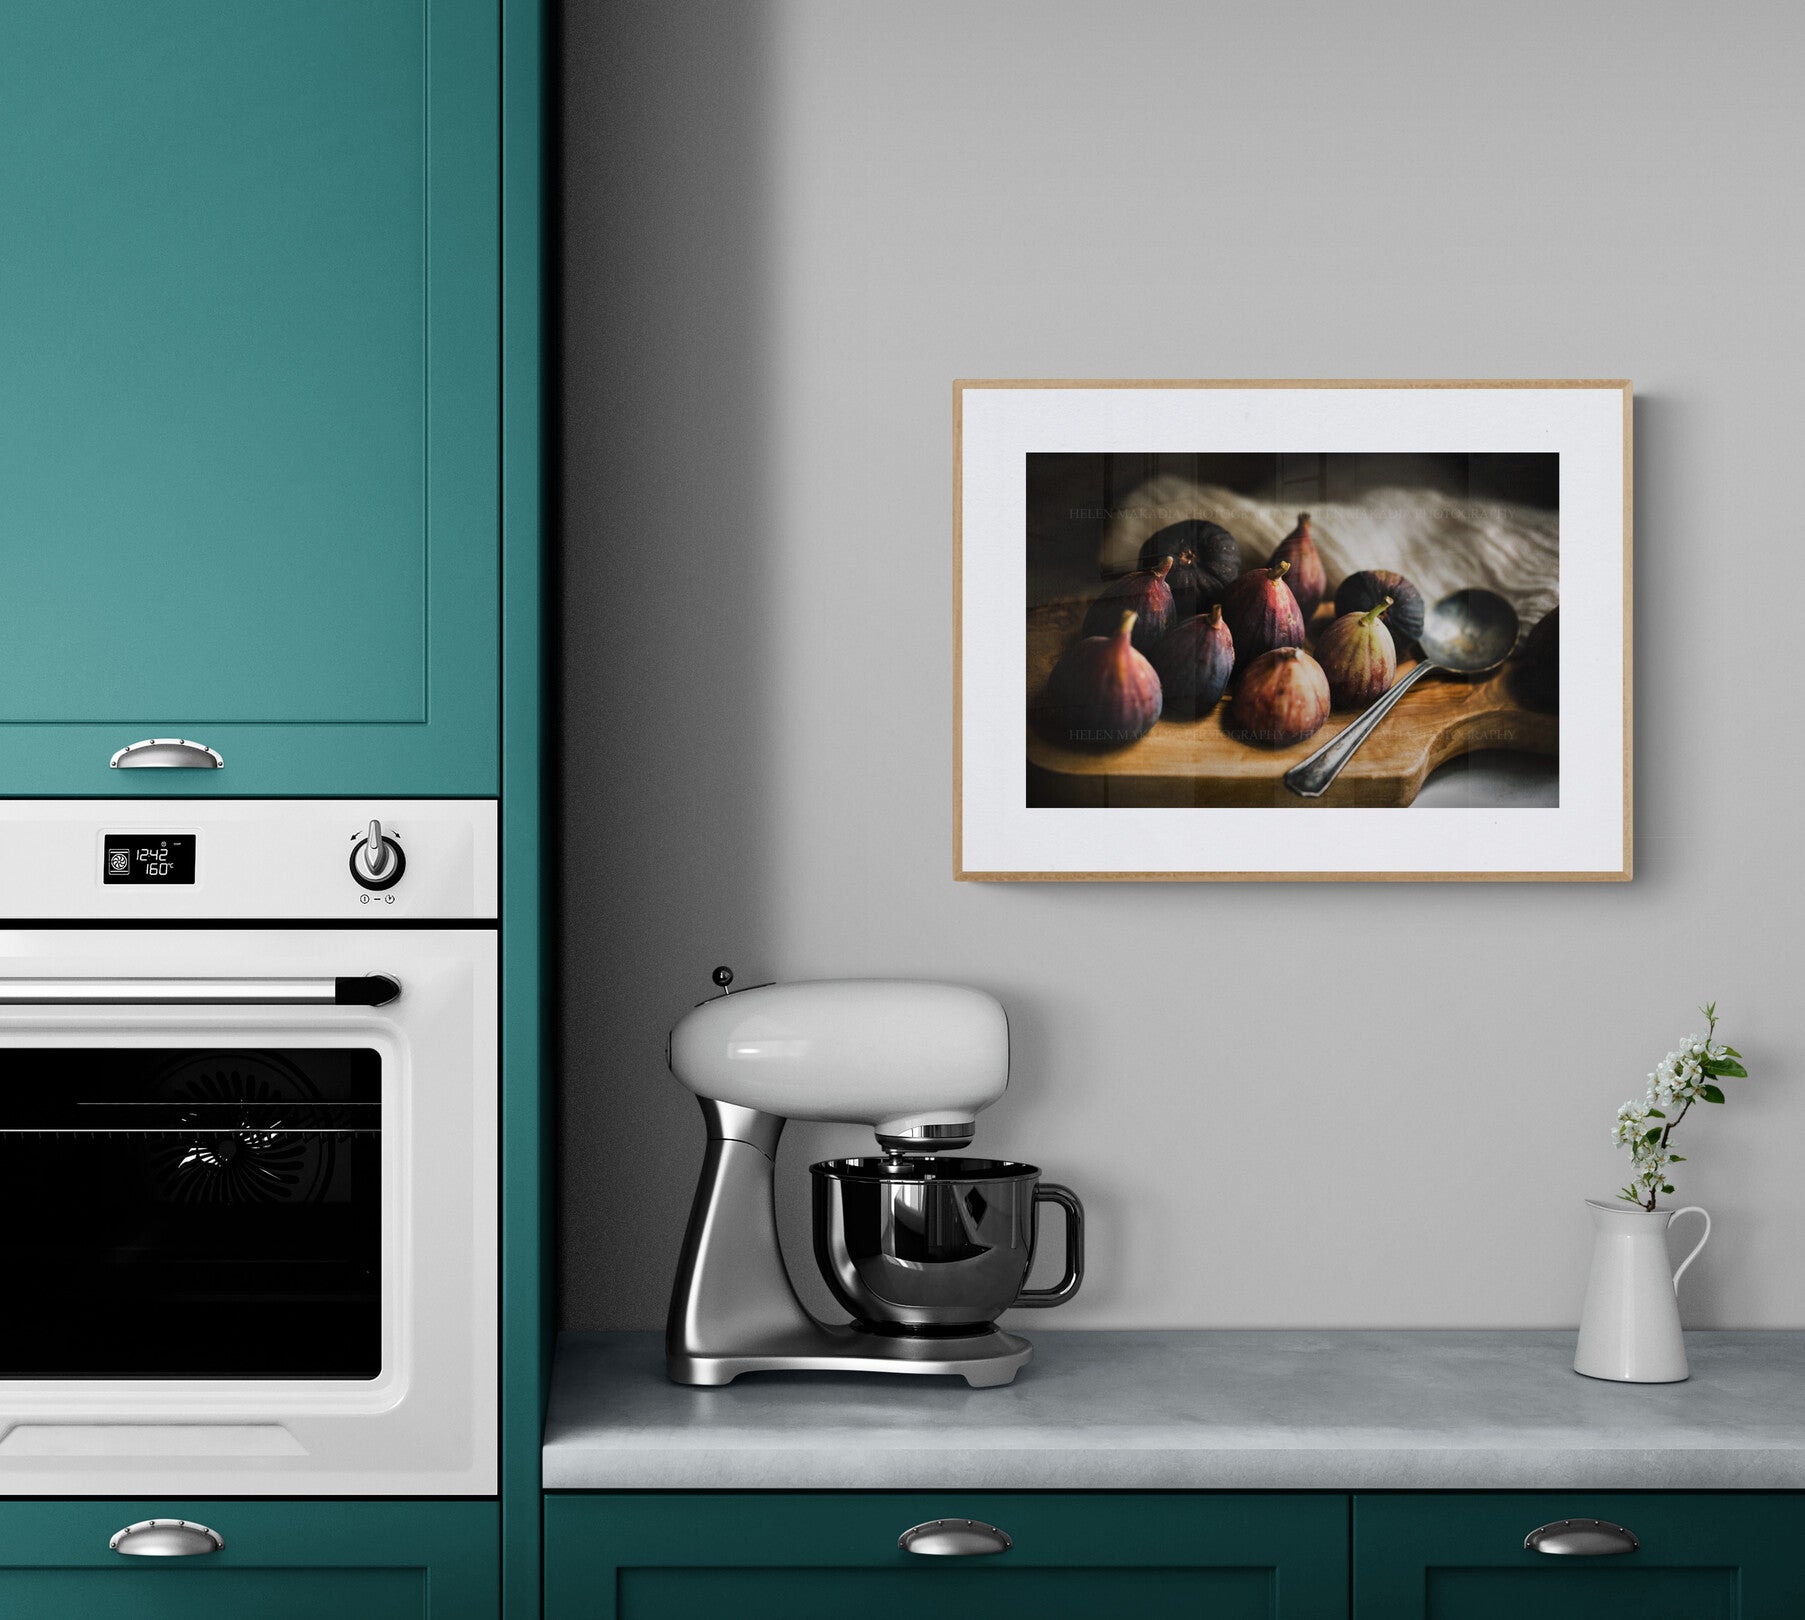 figs photograph print as kitchen wall art in a modern kitchen